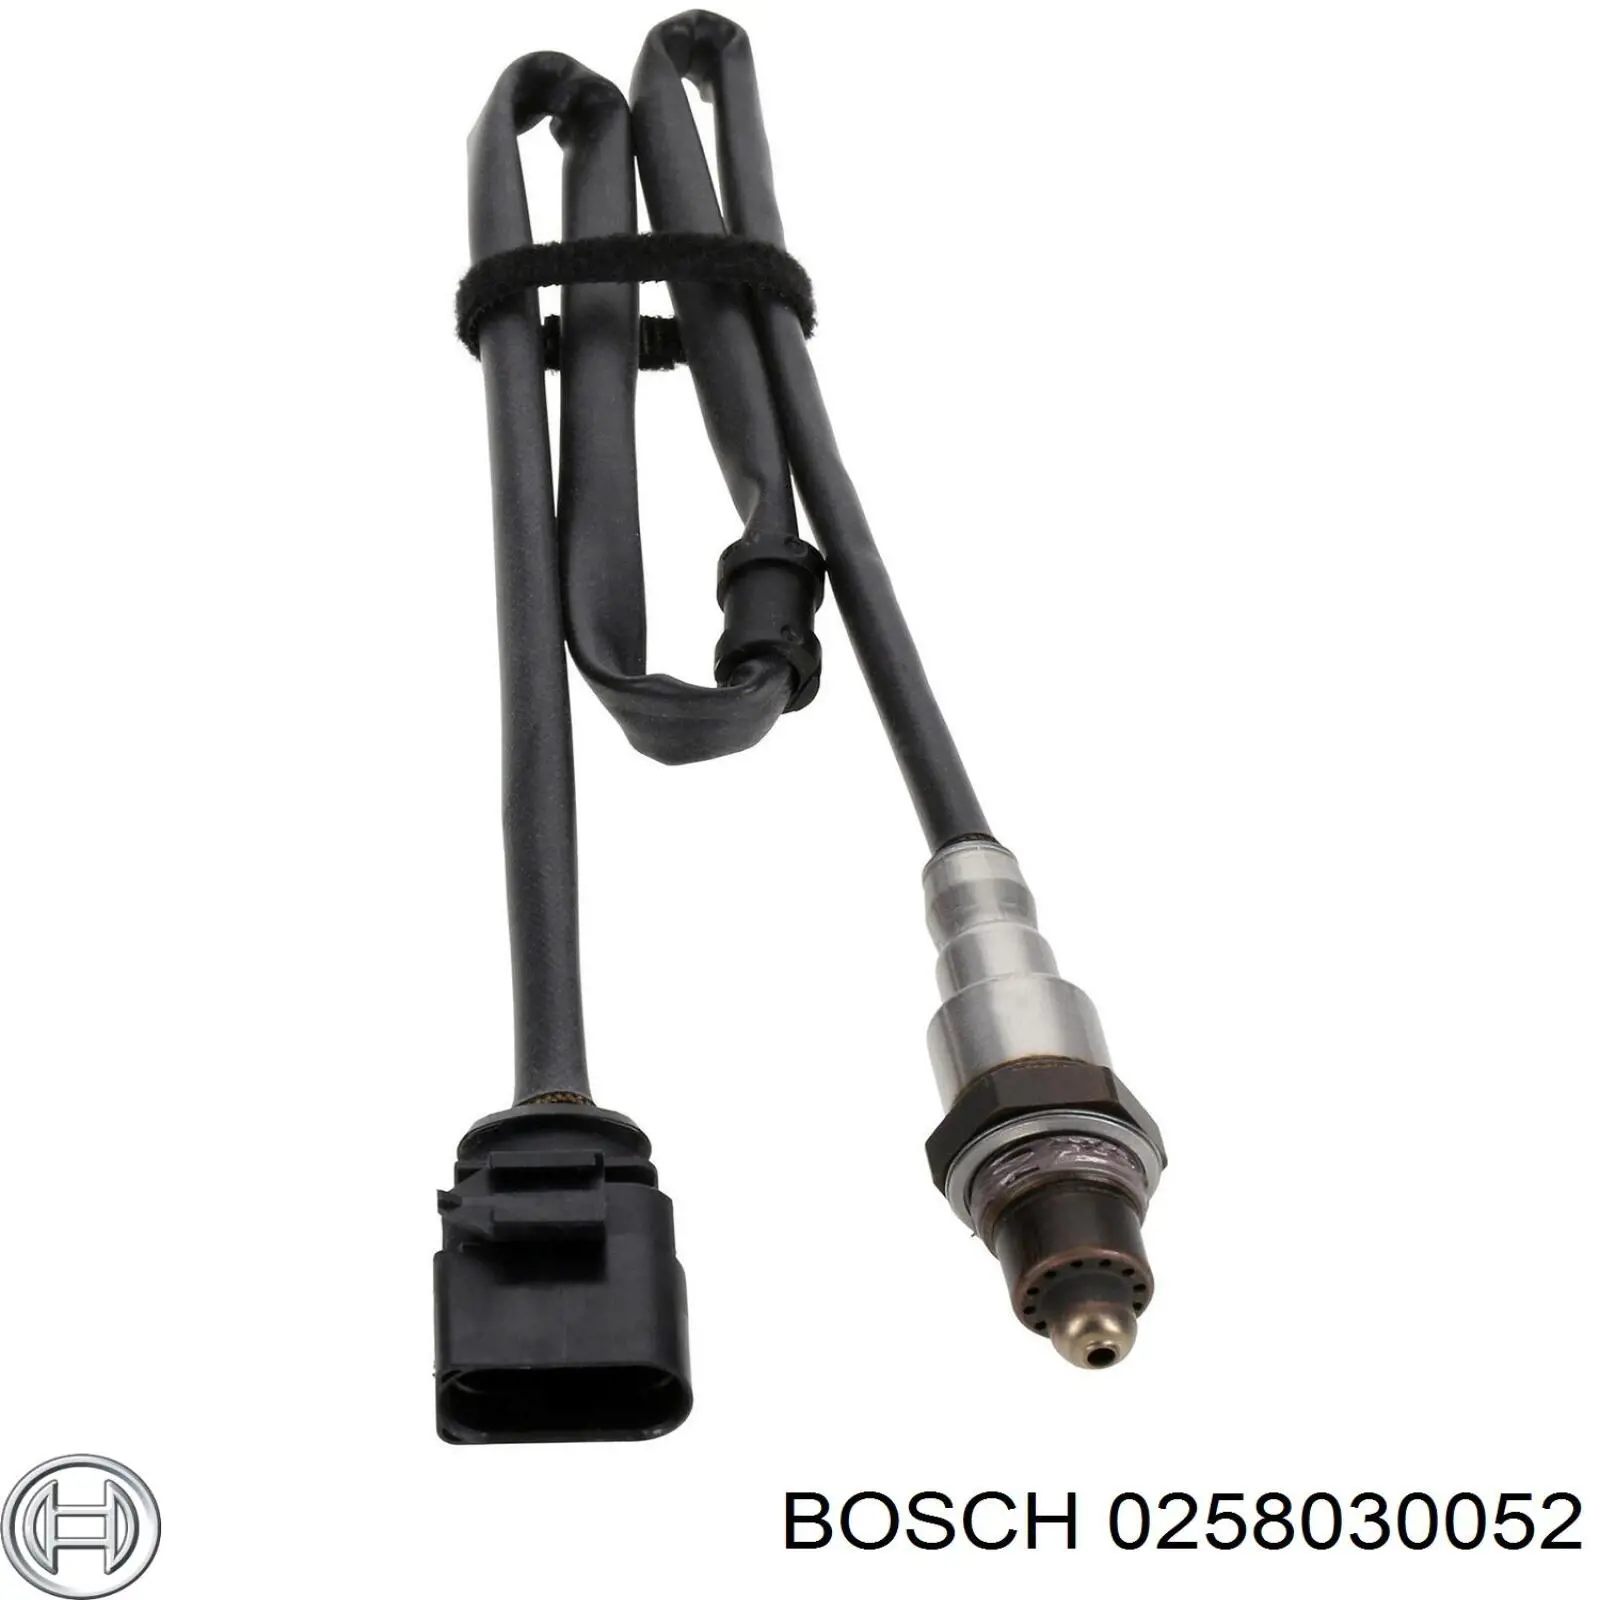 NEW Lambda Oxygen Sensor 0258030052 For VW Passat Beetle Jetta